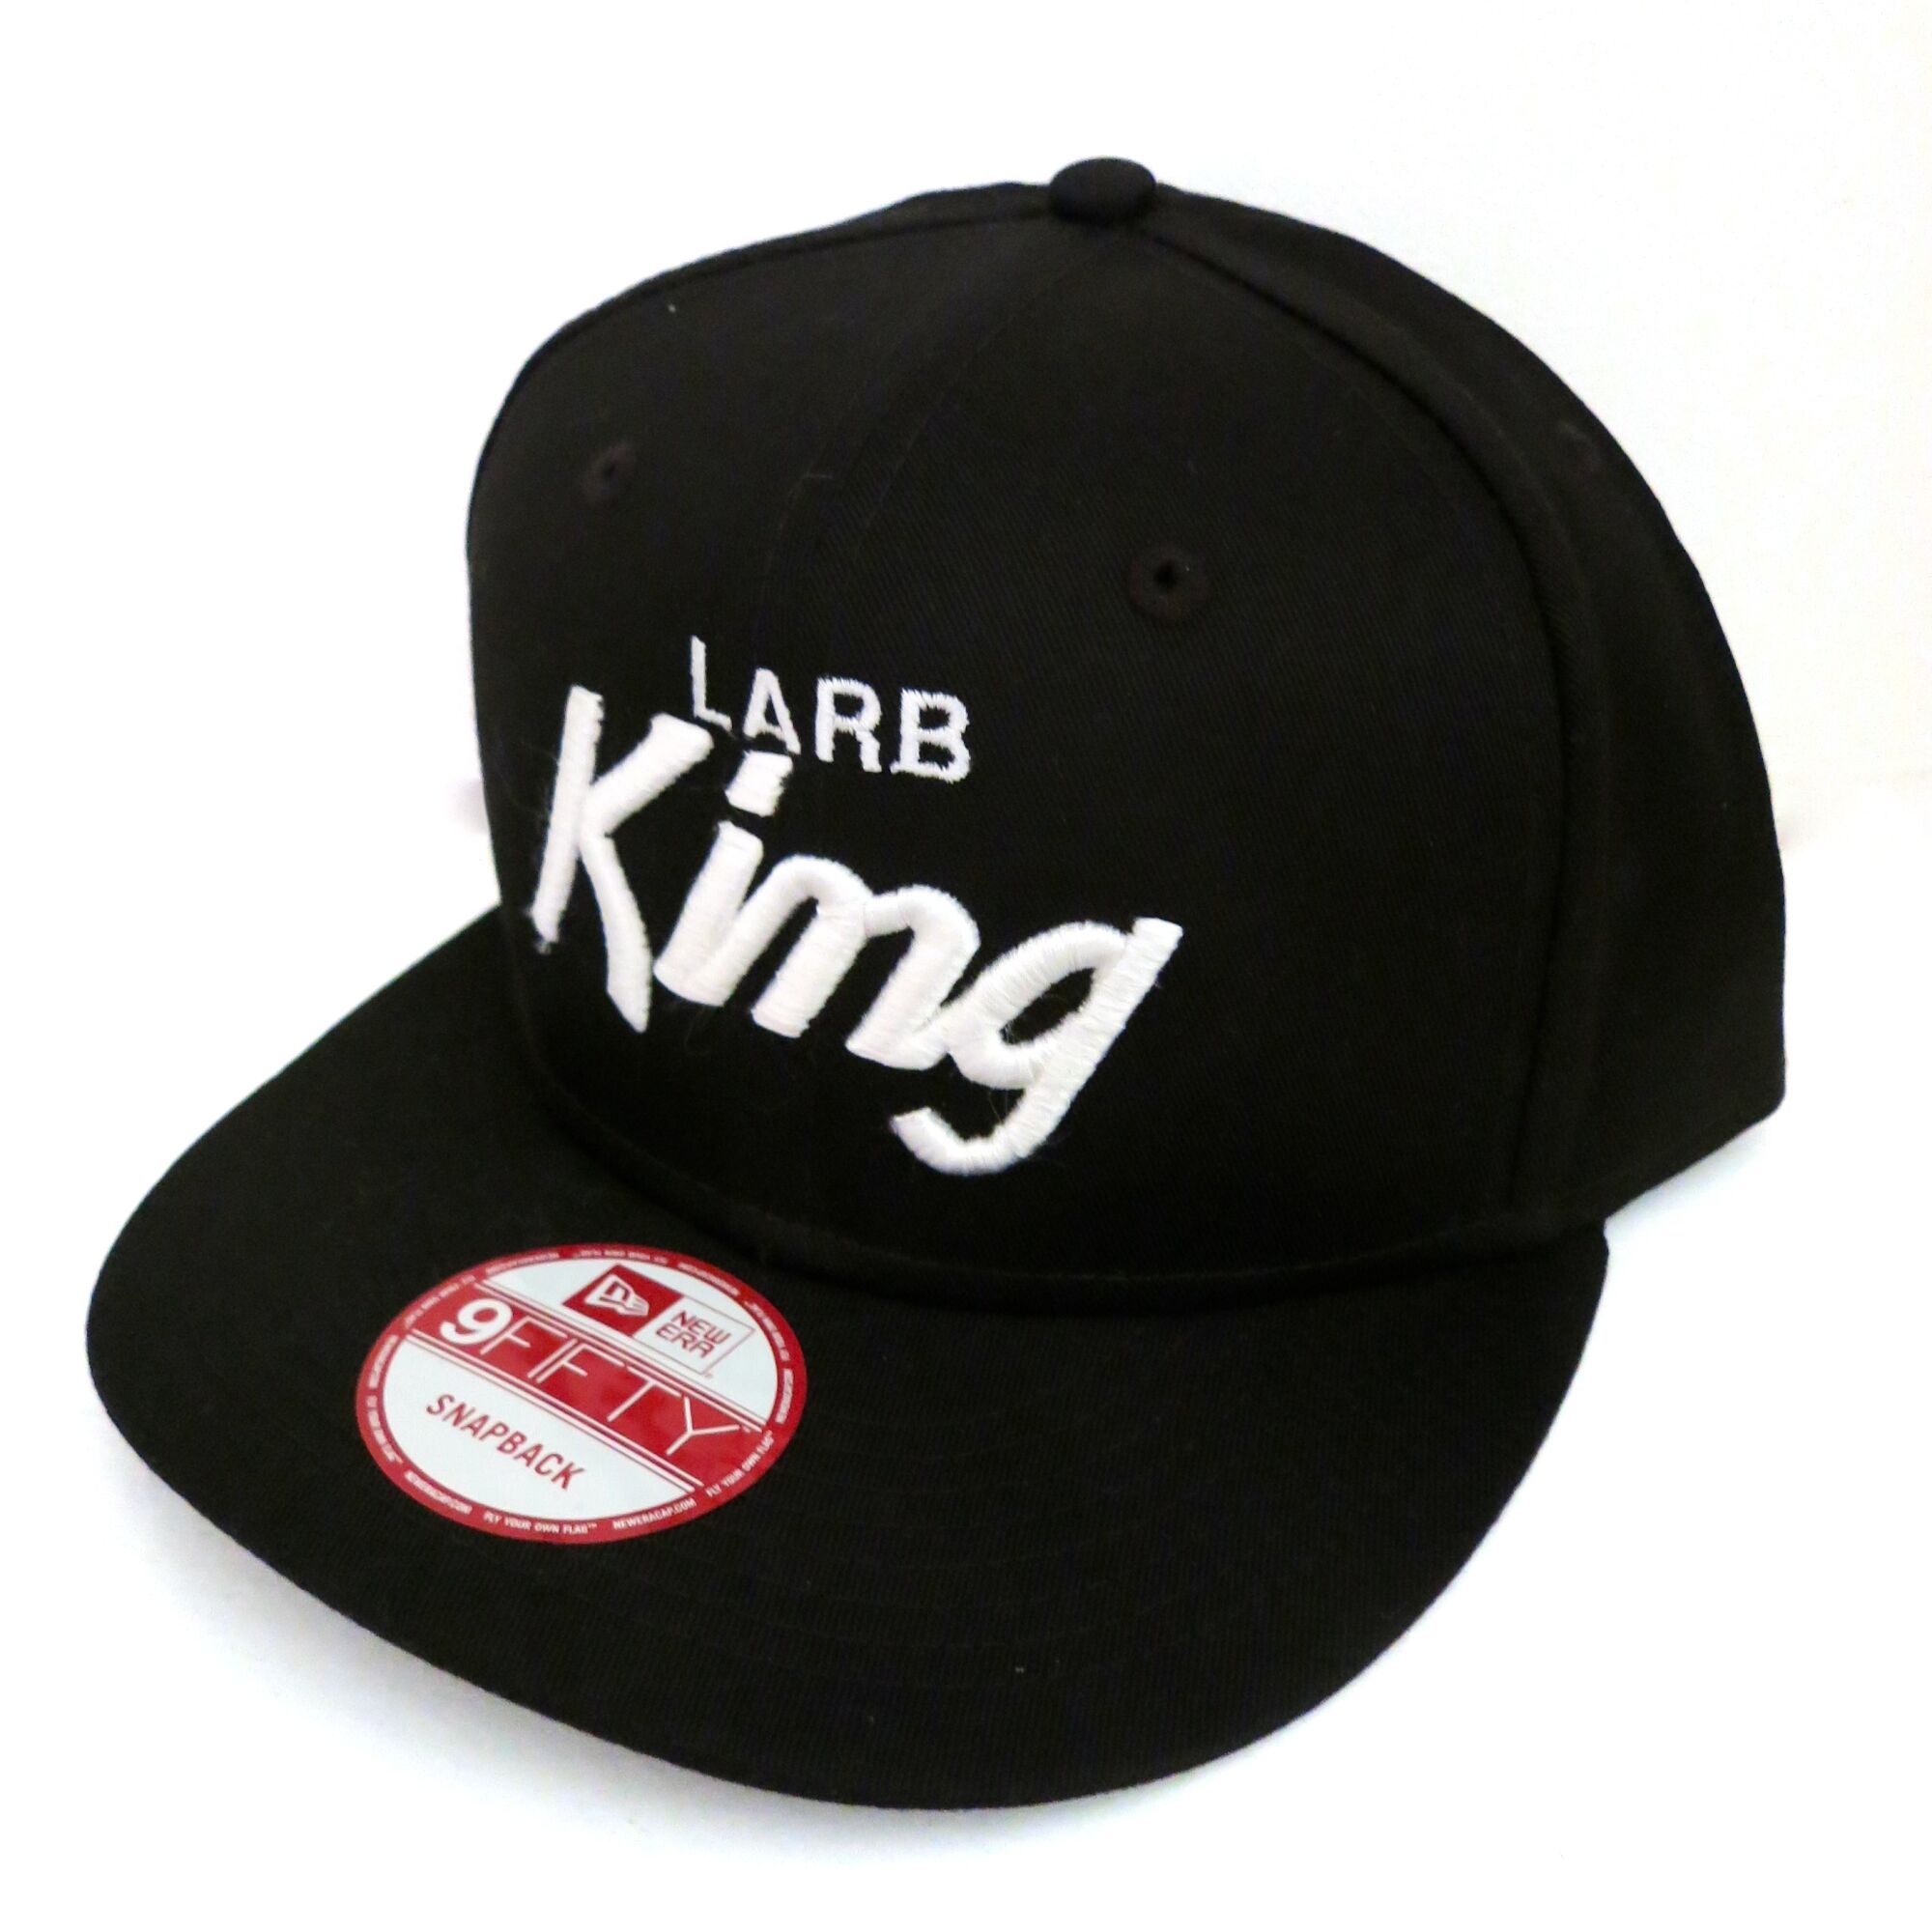 Night + Market - Larb King New Era Snapback, $30